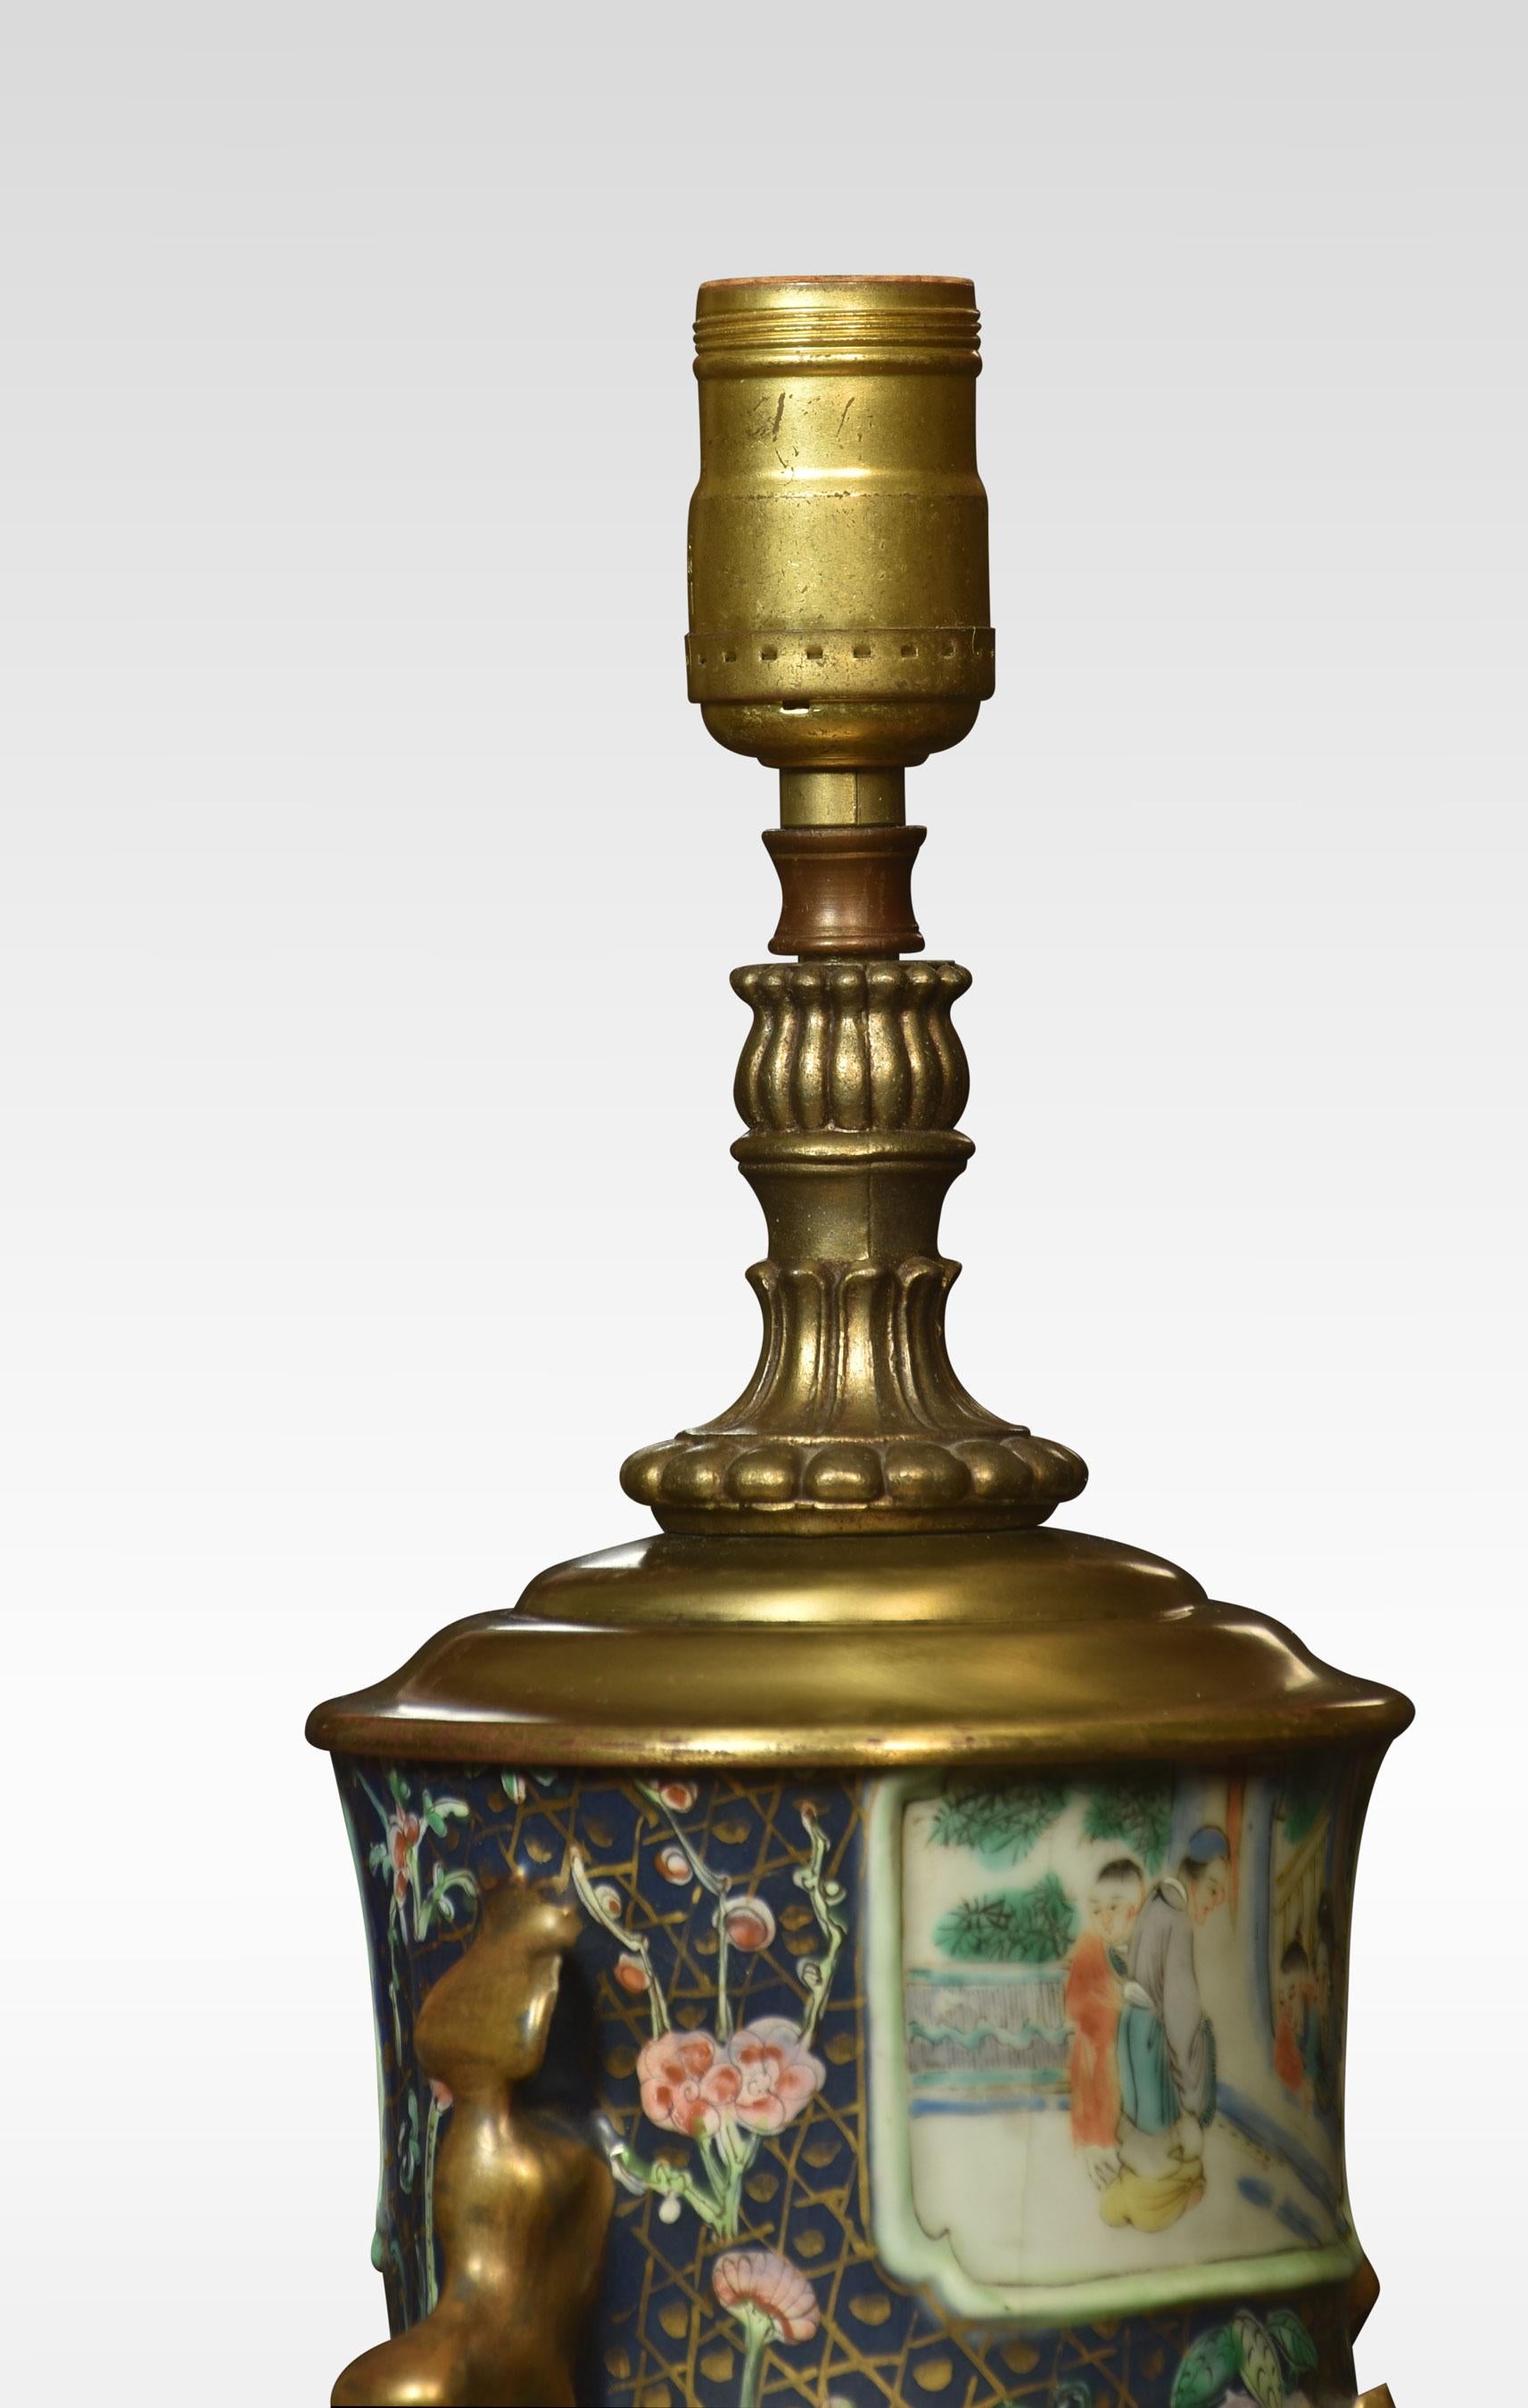 Chinease-Vasenlampe aus dem 19. Jahrhundert (Porzellan) im Angebot